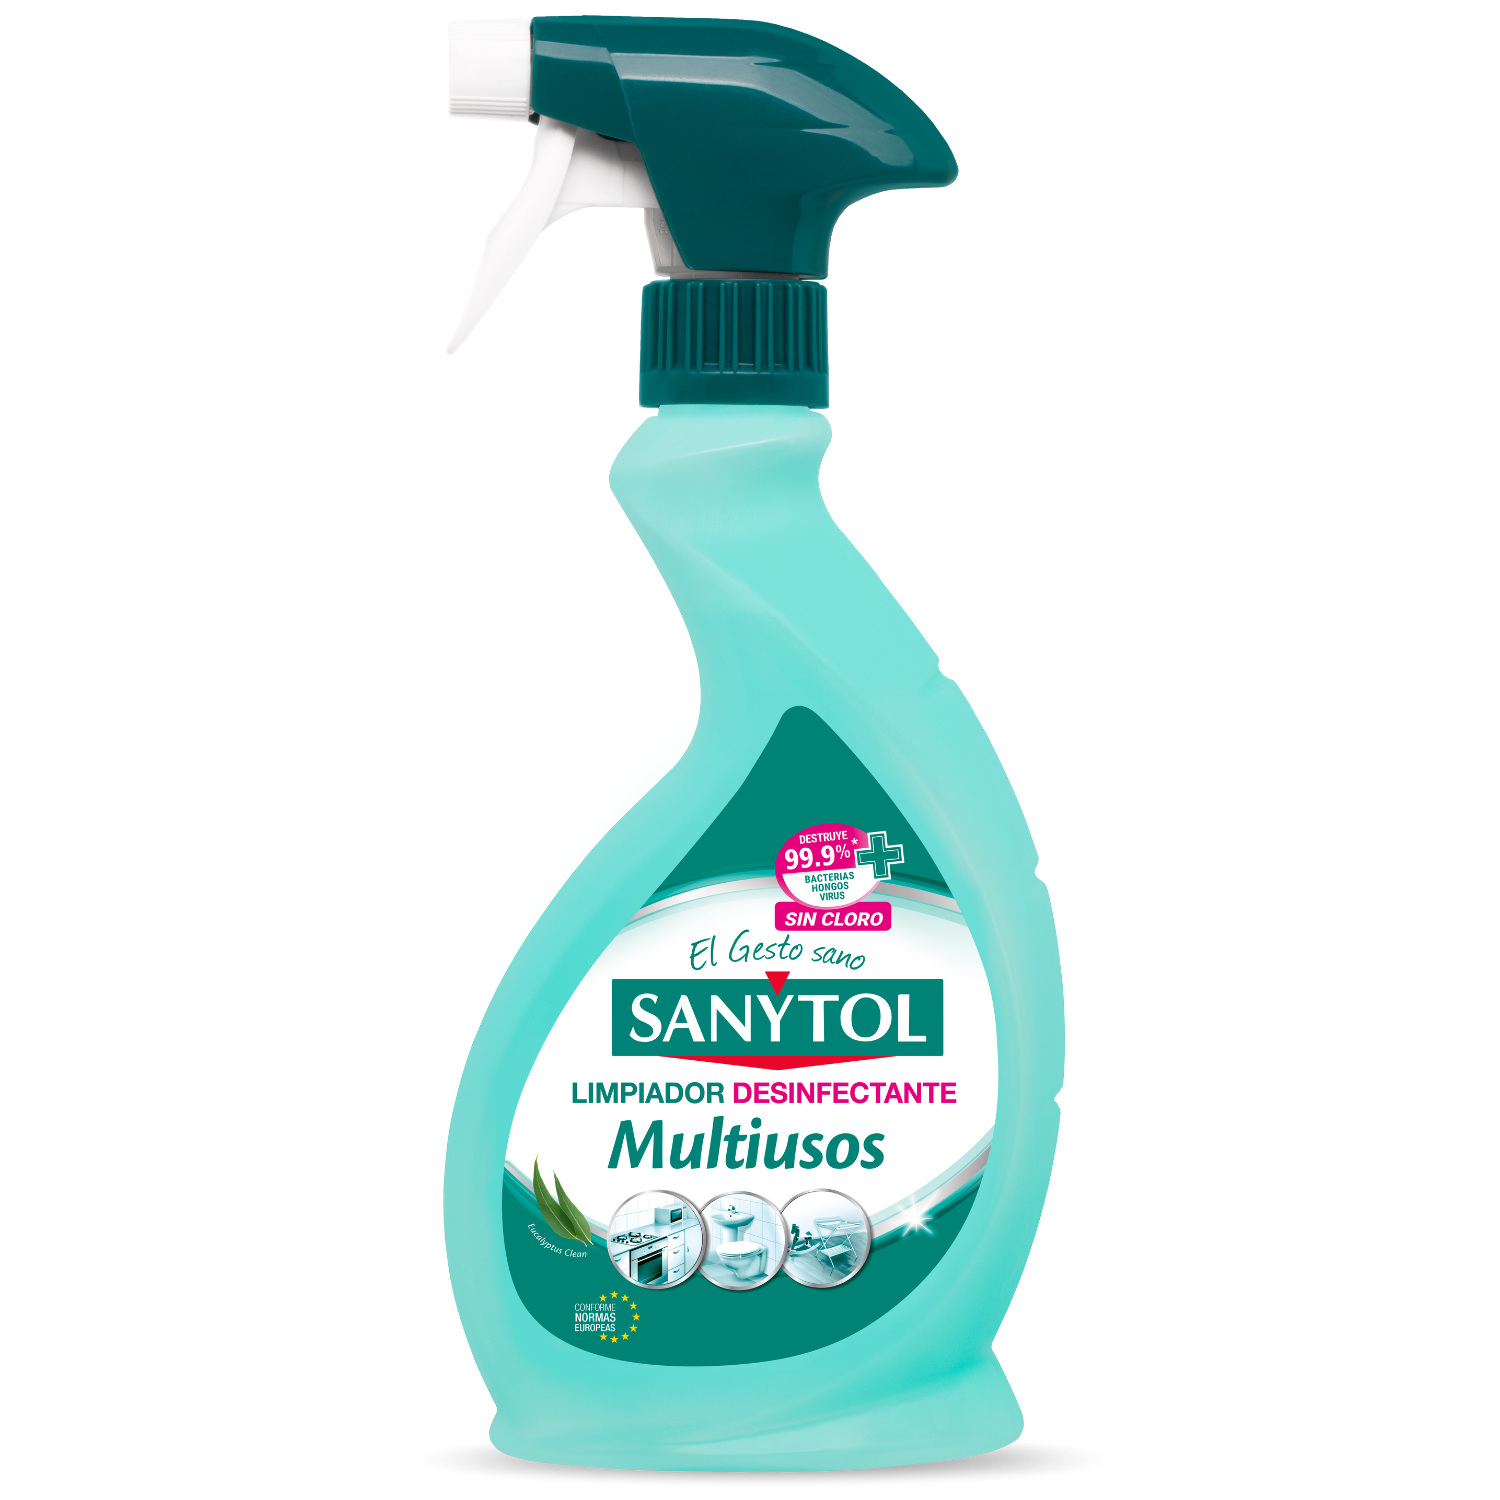 SANYTOL limpiador desinfectante multiusos